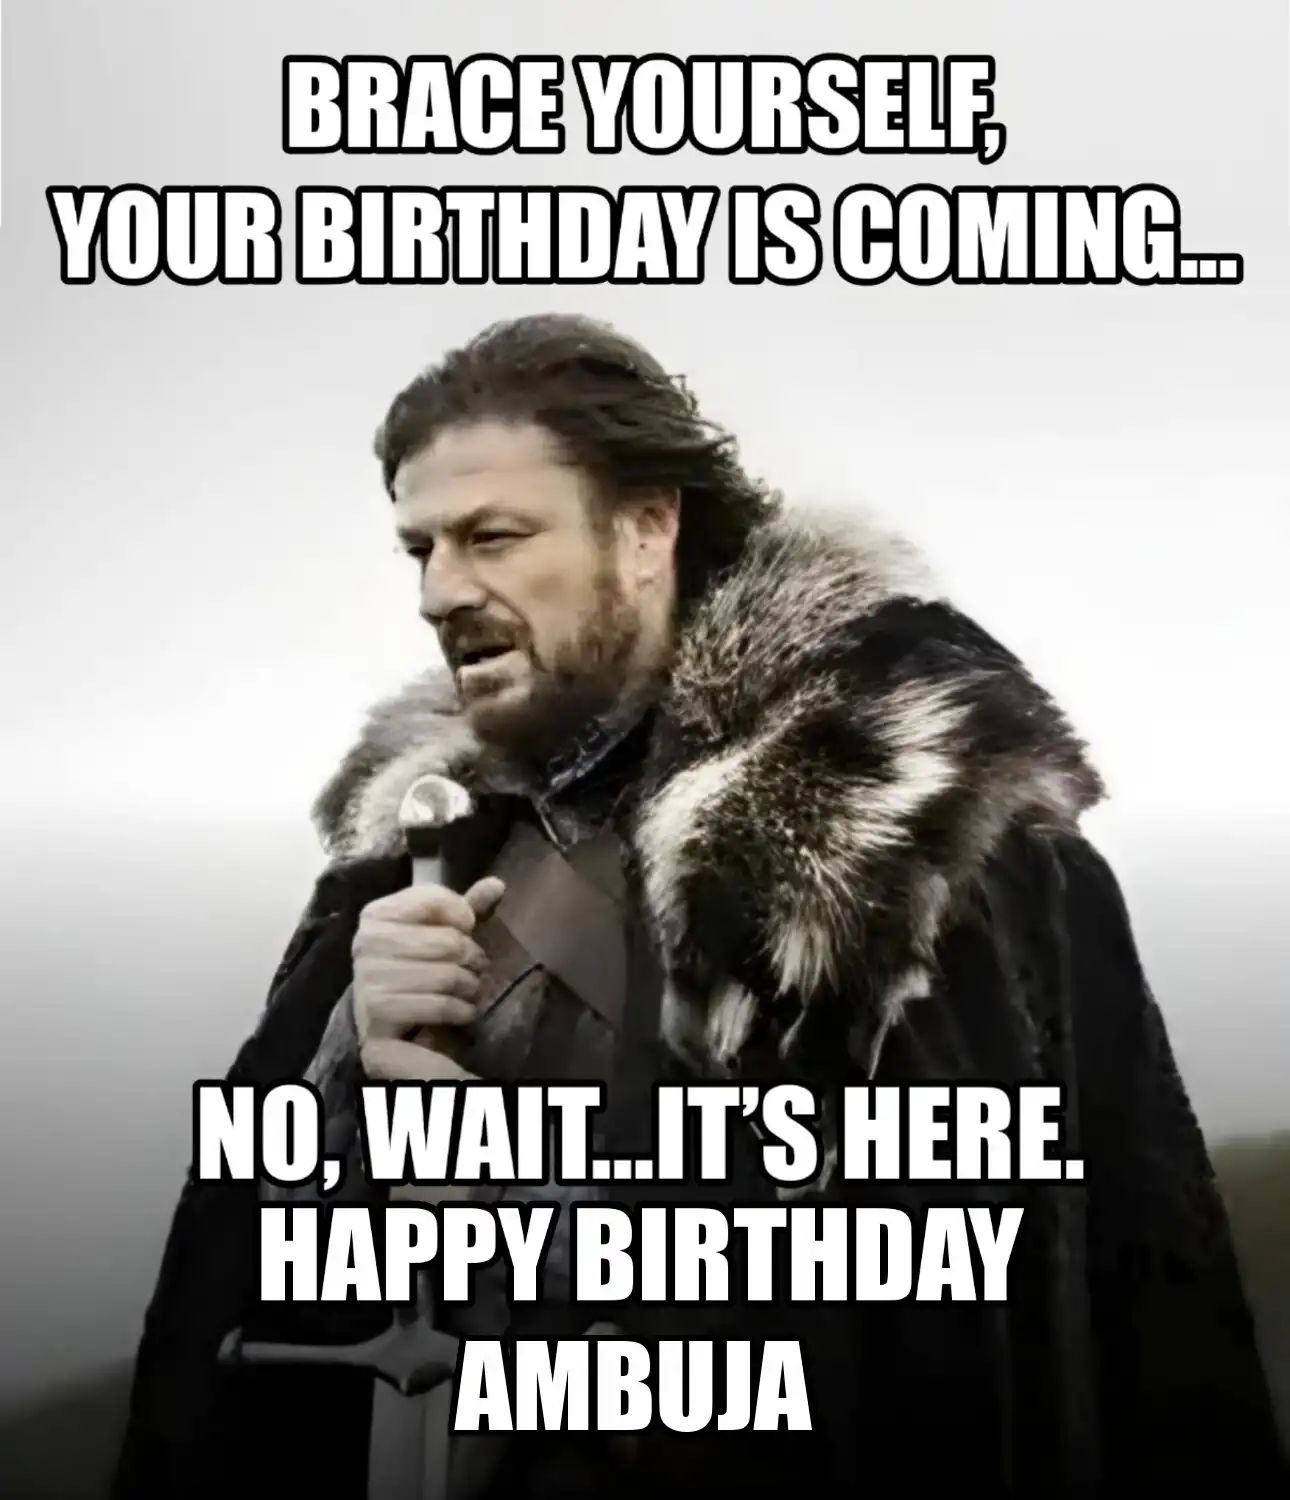 Happy Birthday Ambuja Brace Yourself Your Birthday Is Coming Meme